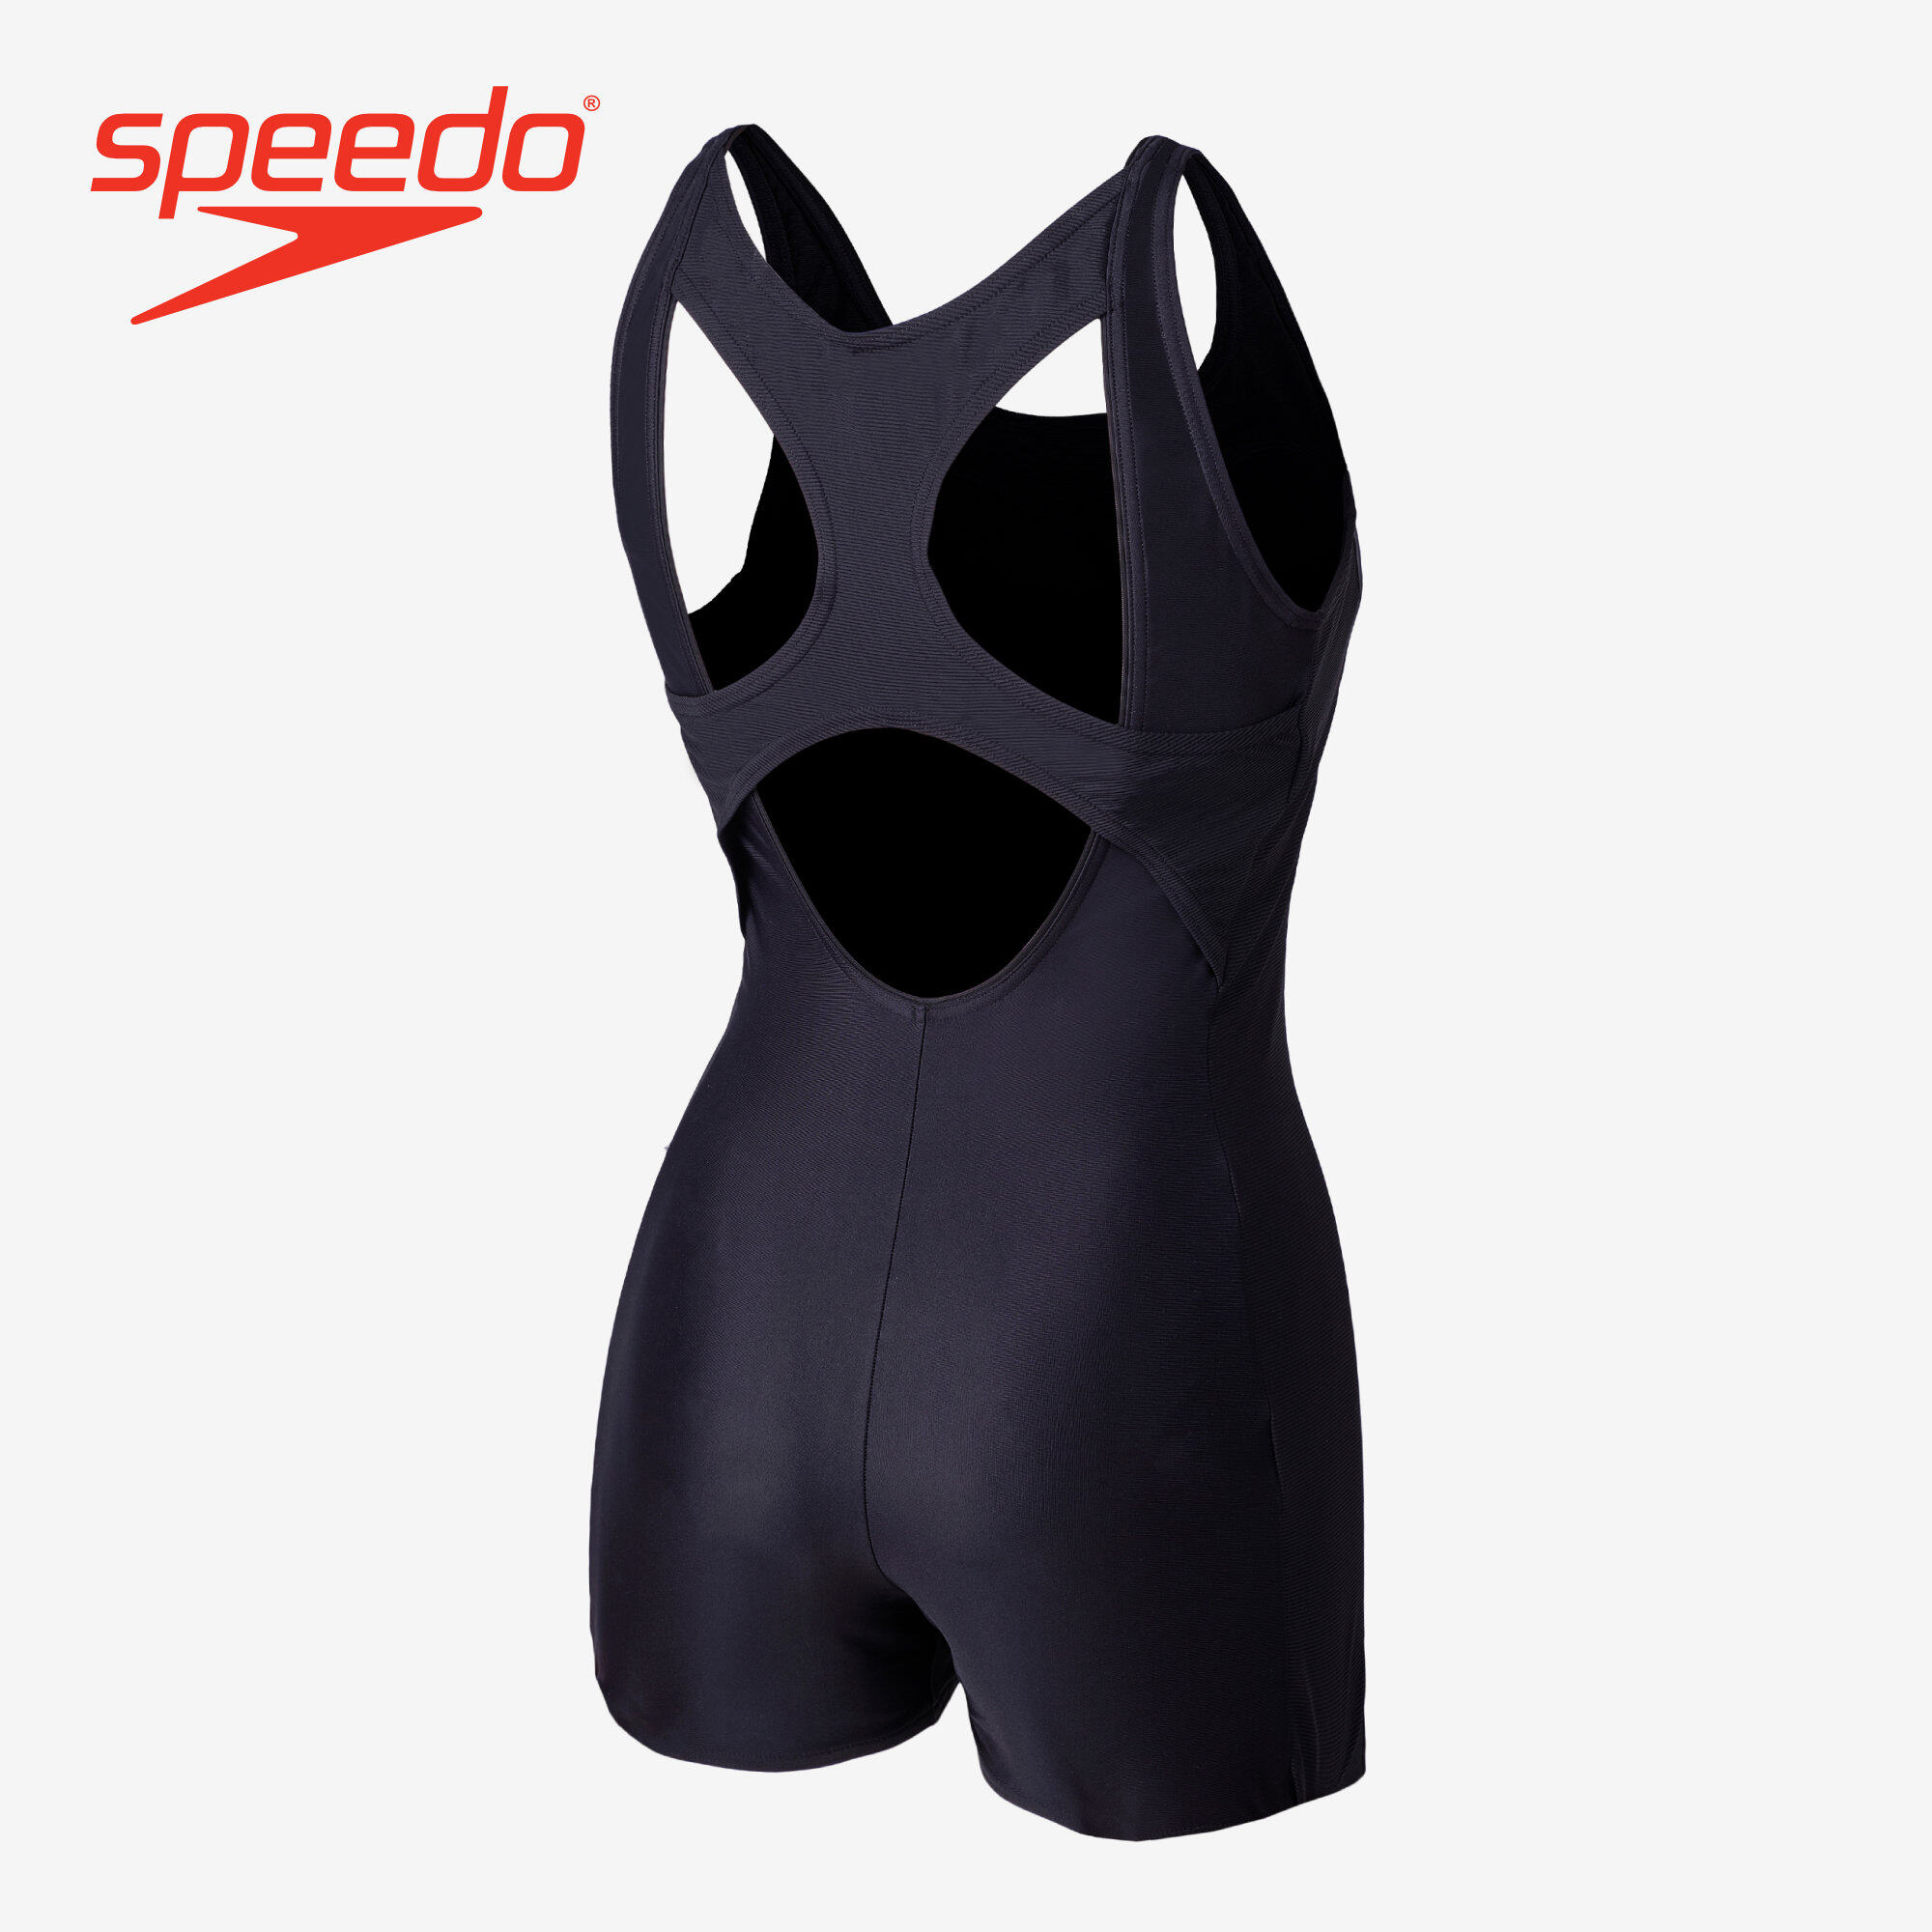 Speedo - Adult Women's Fitness Swimwear - Noir Collection - Extra 